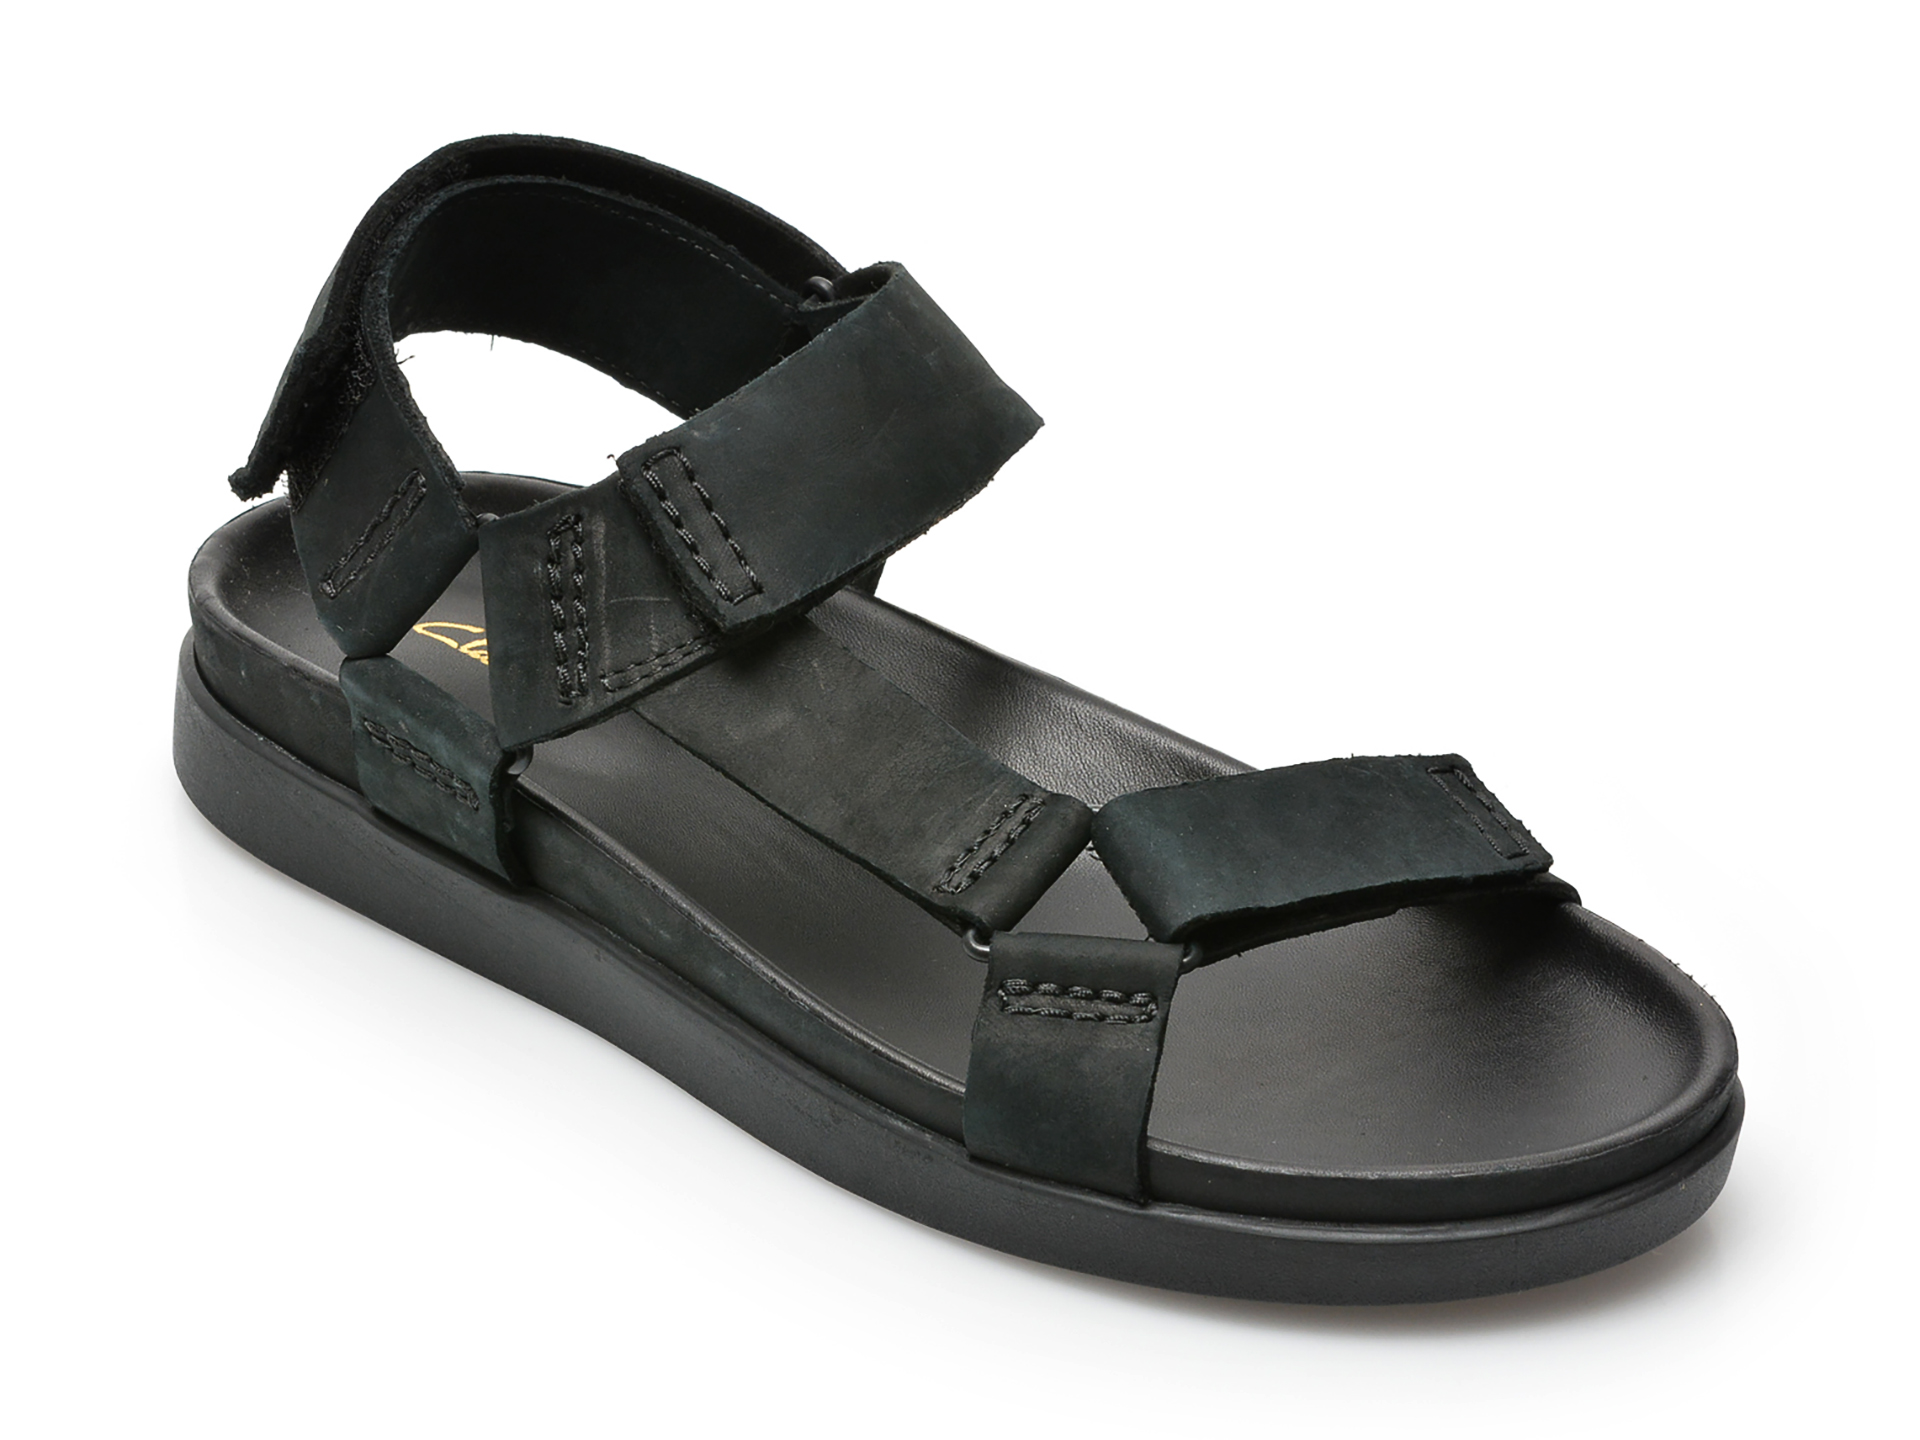 Sandale CLARKS negre, SUNDRAN, din nabuc Clarks imagine 2022 reducere